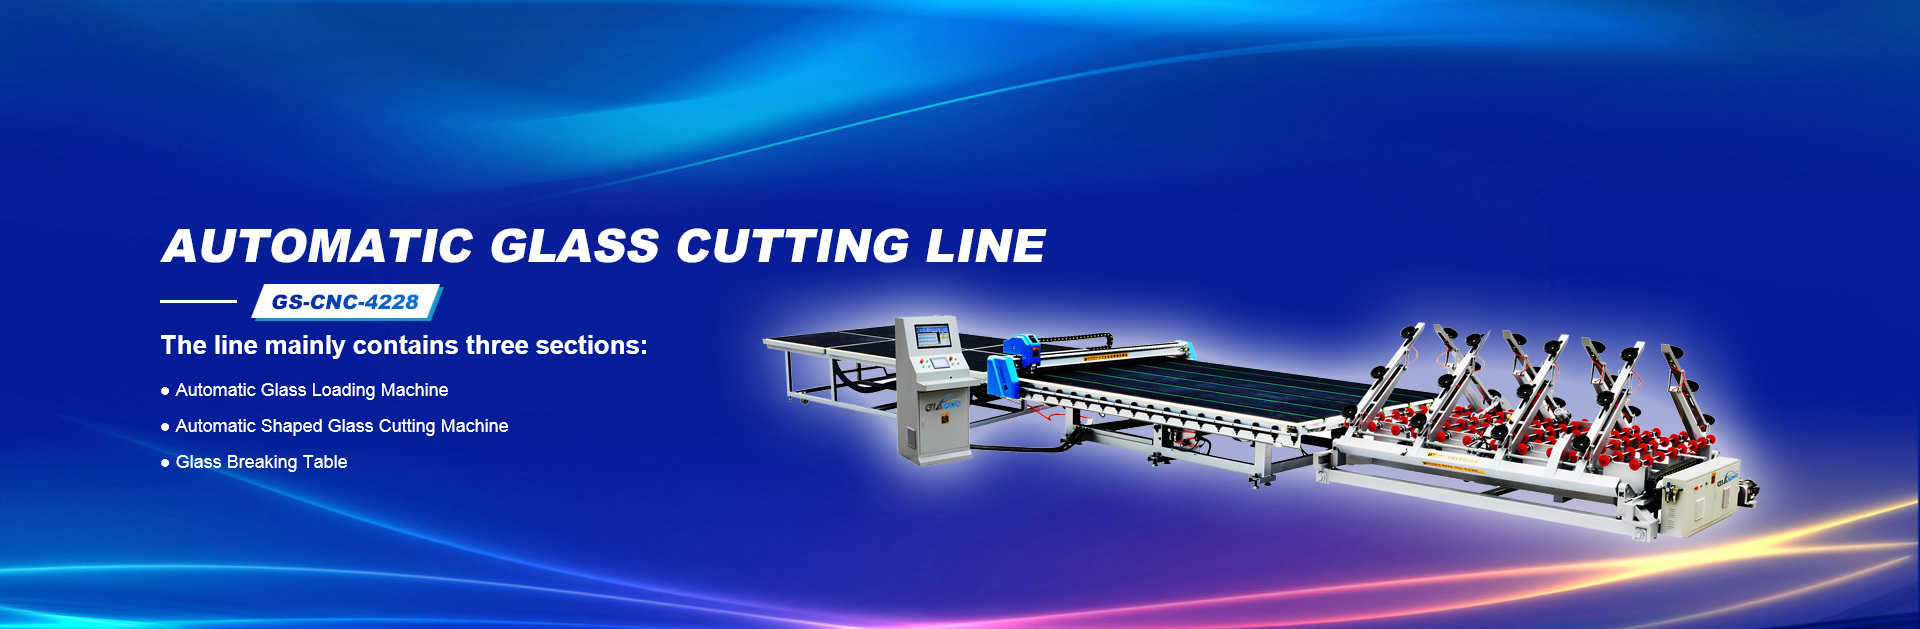 Automatic Glass Cutting Line